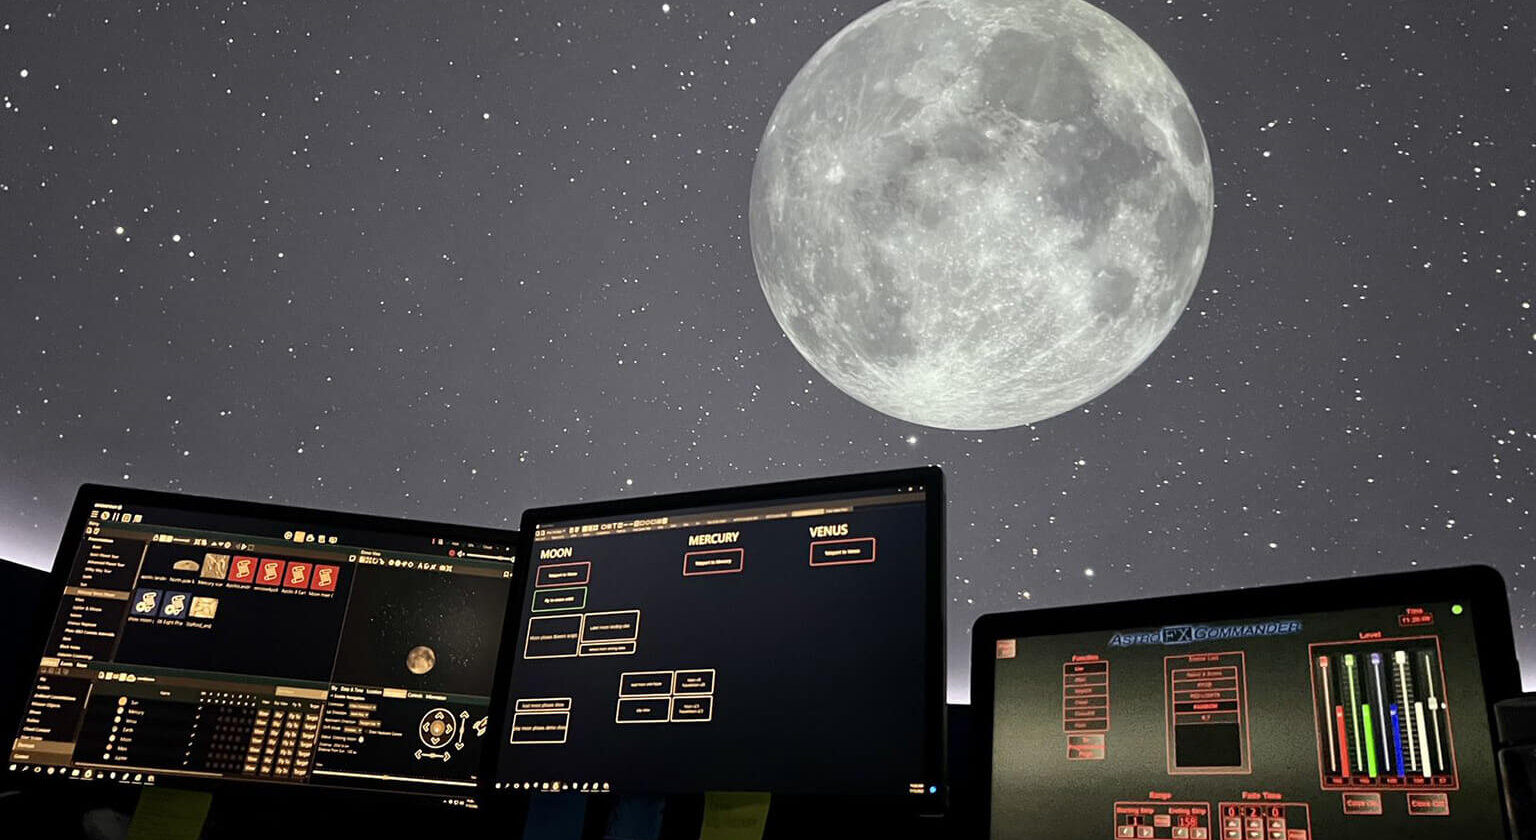 space exploration monitors illustrated through moon image at the Planetarium 